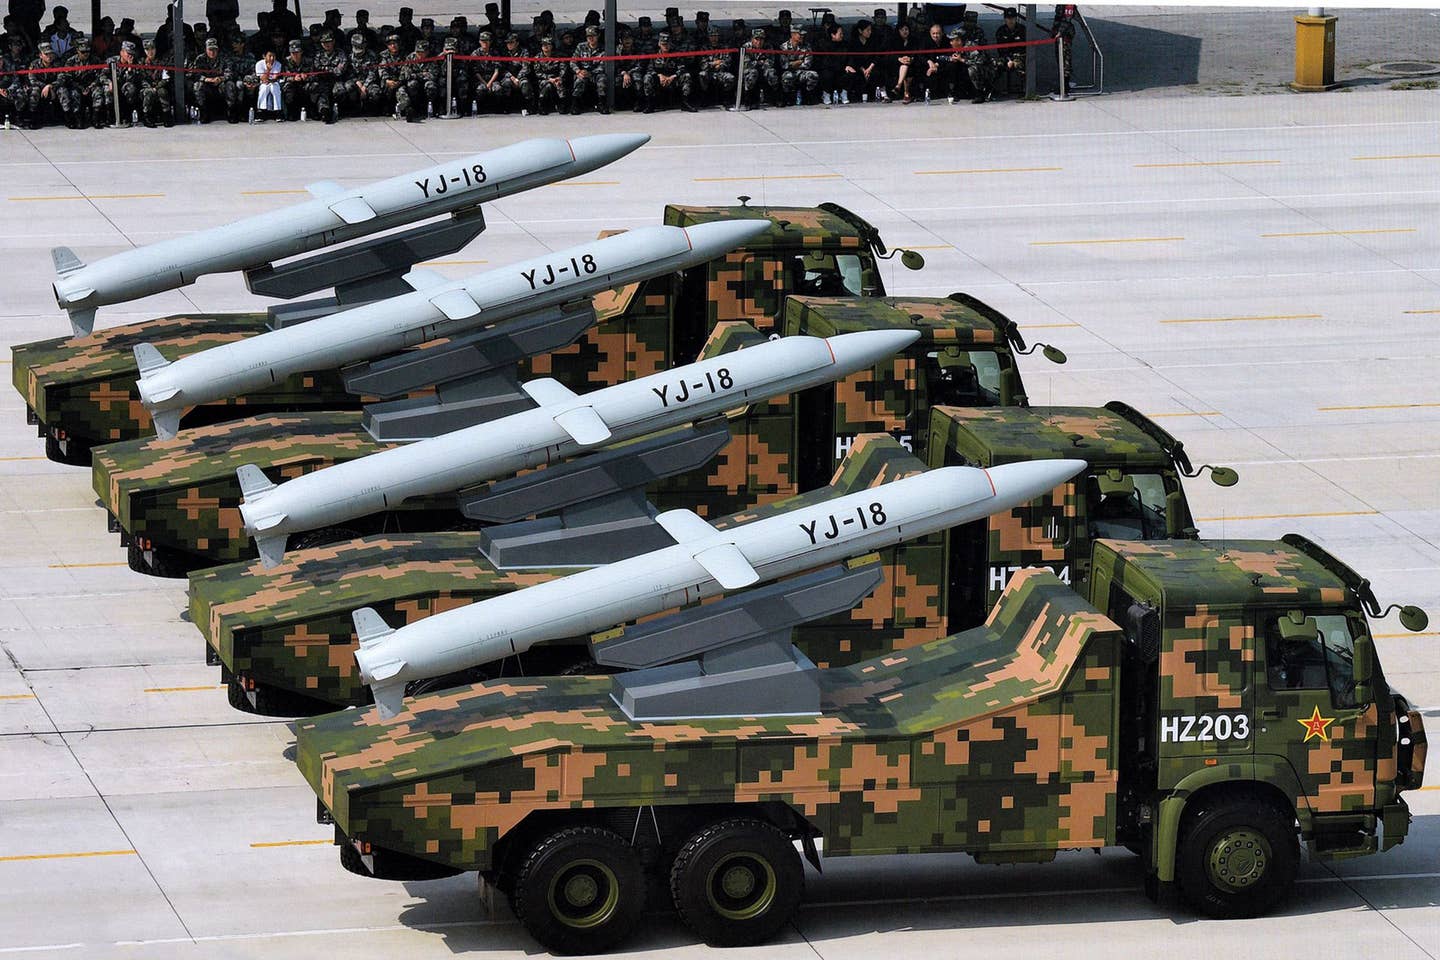 YJ-18 missiles on display during a Chinese military parade. <em>Credit: Salah Rashad Zaqzoq/Wikimedia Commons</em>